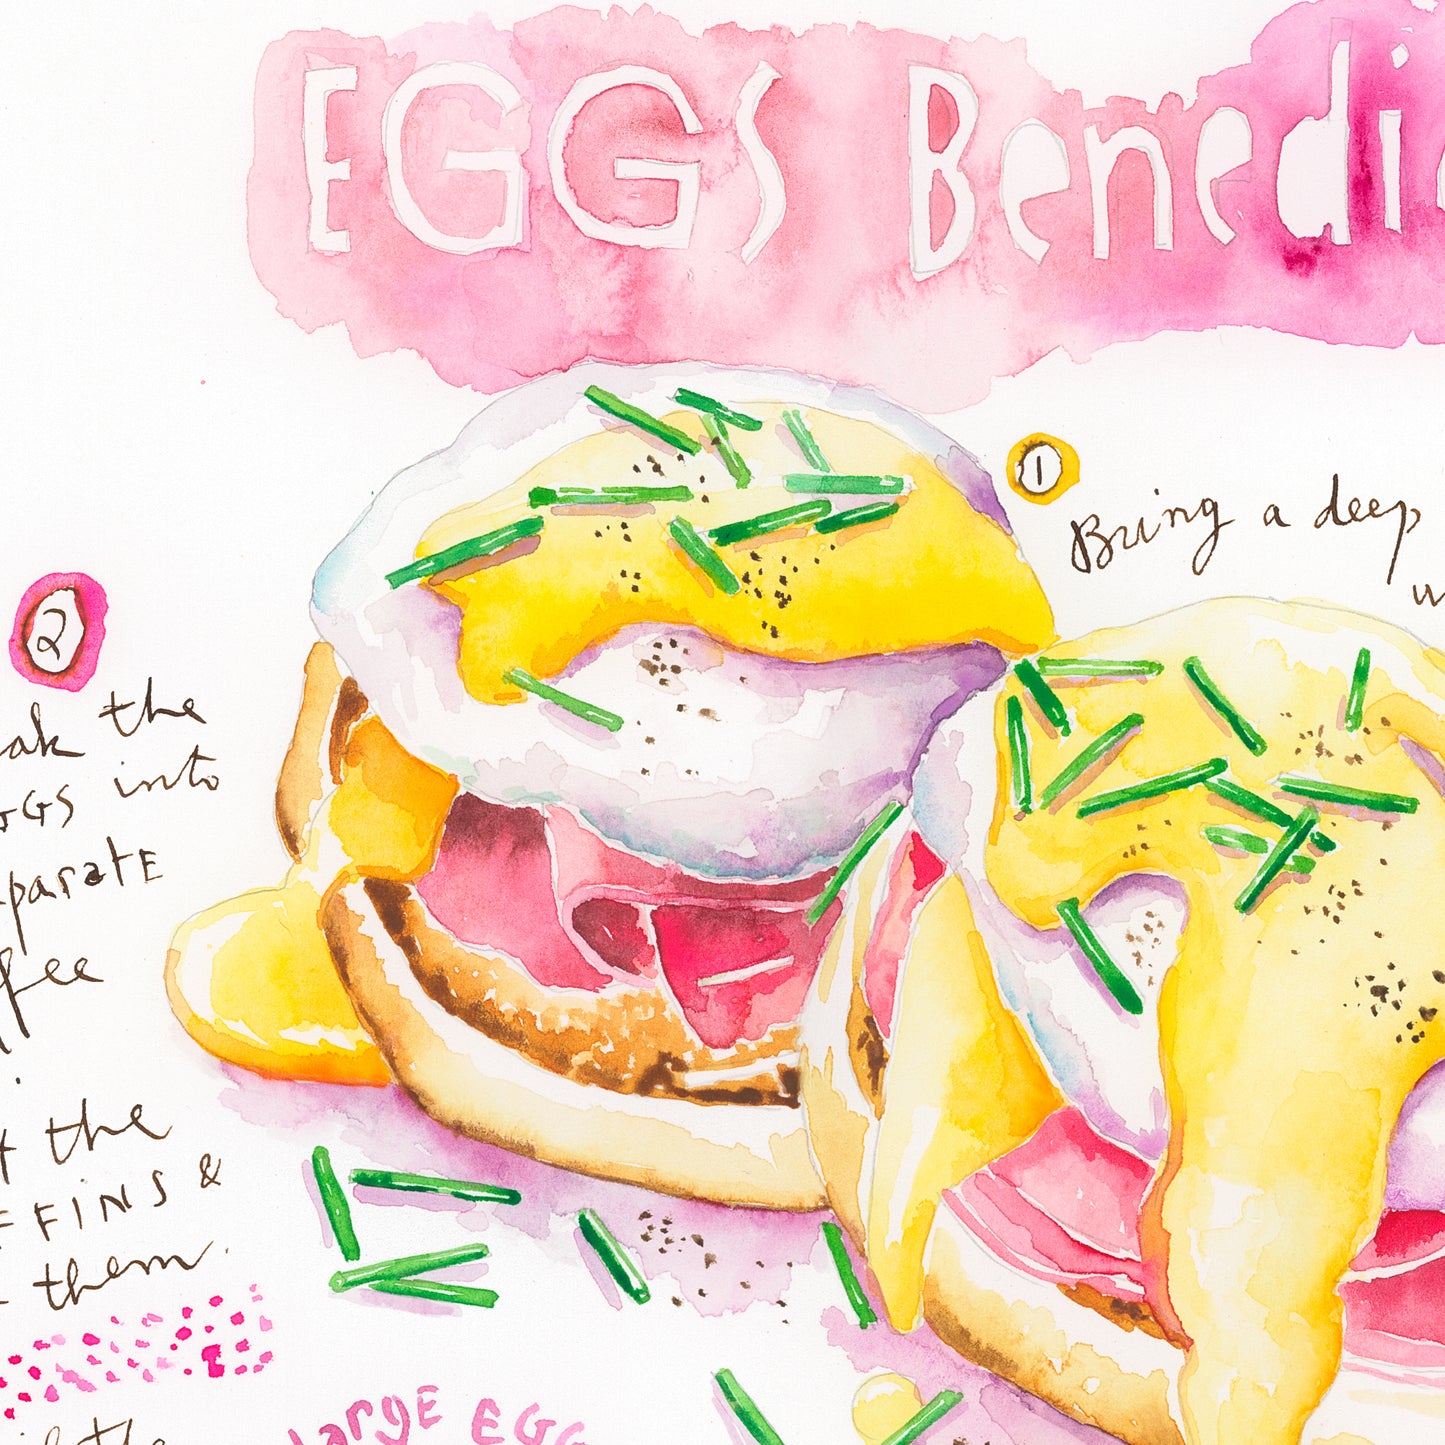 Eggs Benedict recipe. Original watercolor painting